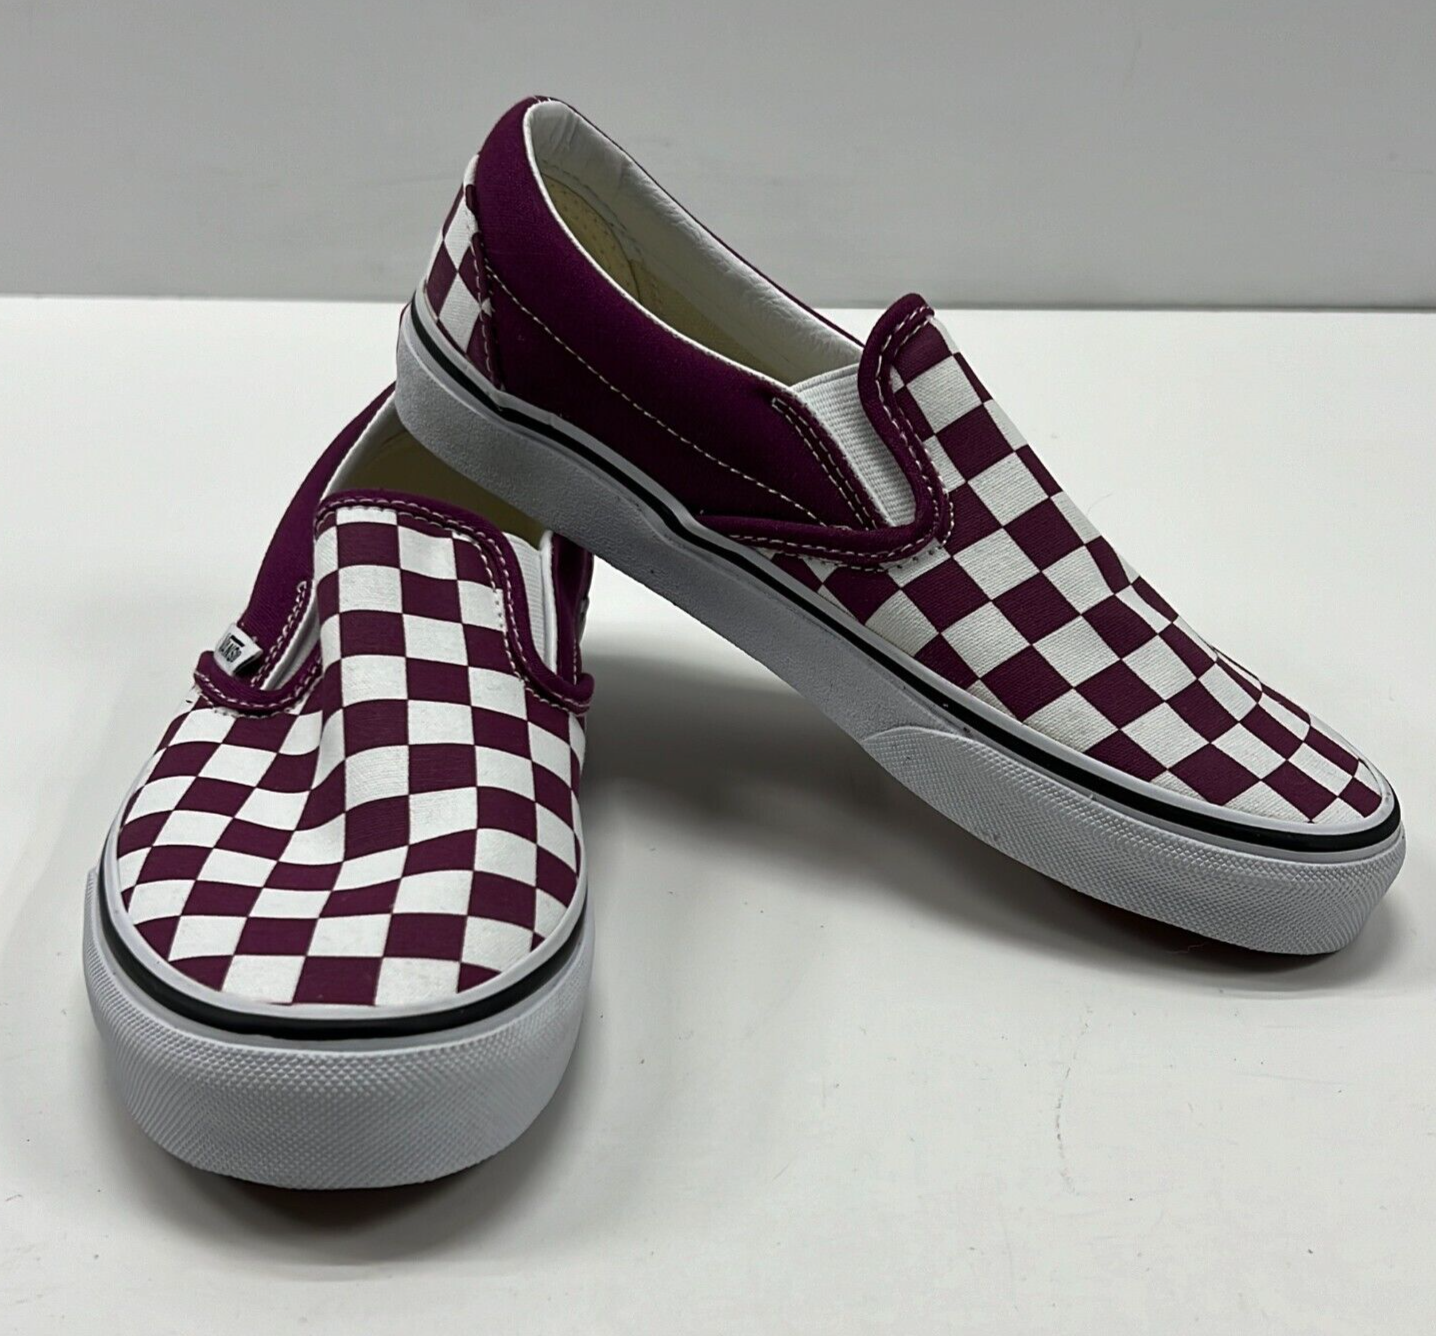 Vans Unisex Classic 507698 Purple White Slip-On Sneaker Shoes Size M 5 W 6.5